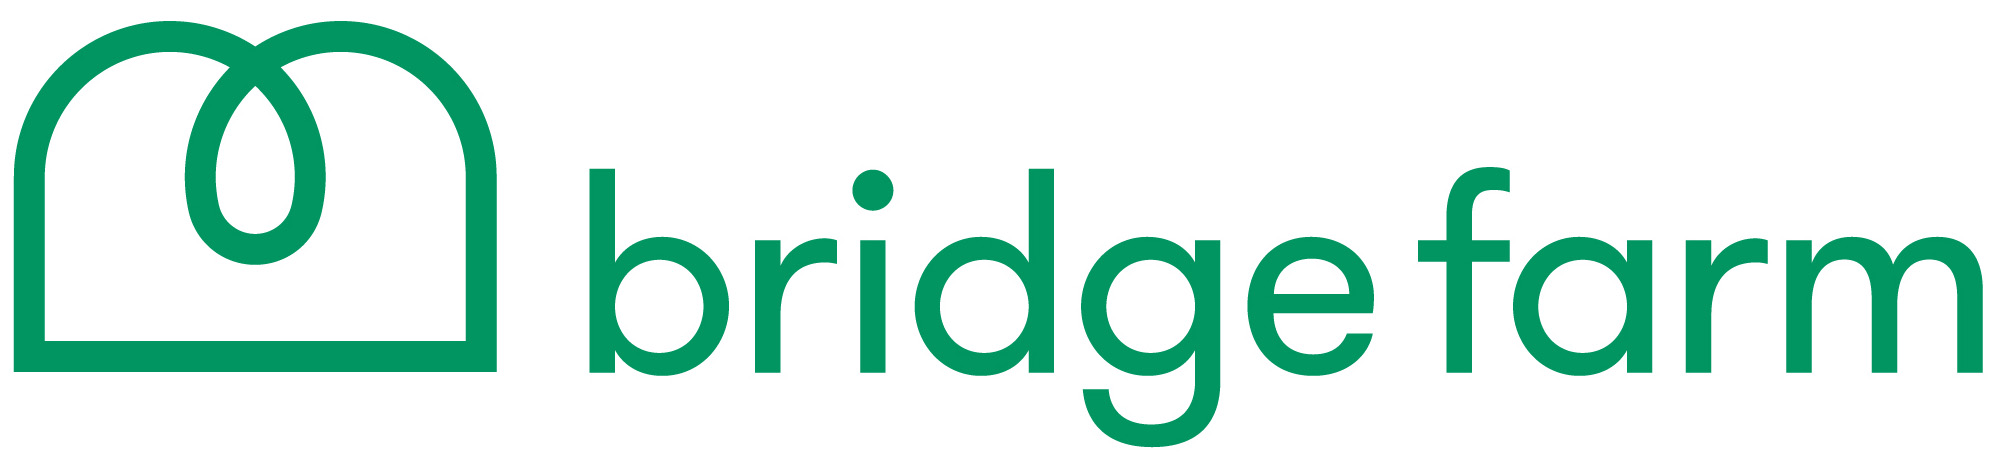 Bridge farm group logo